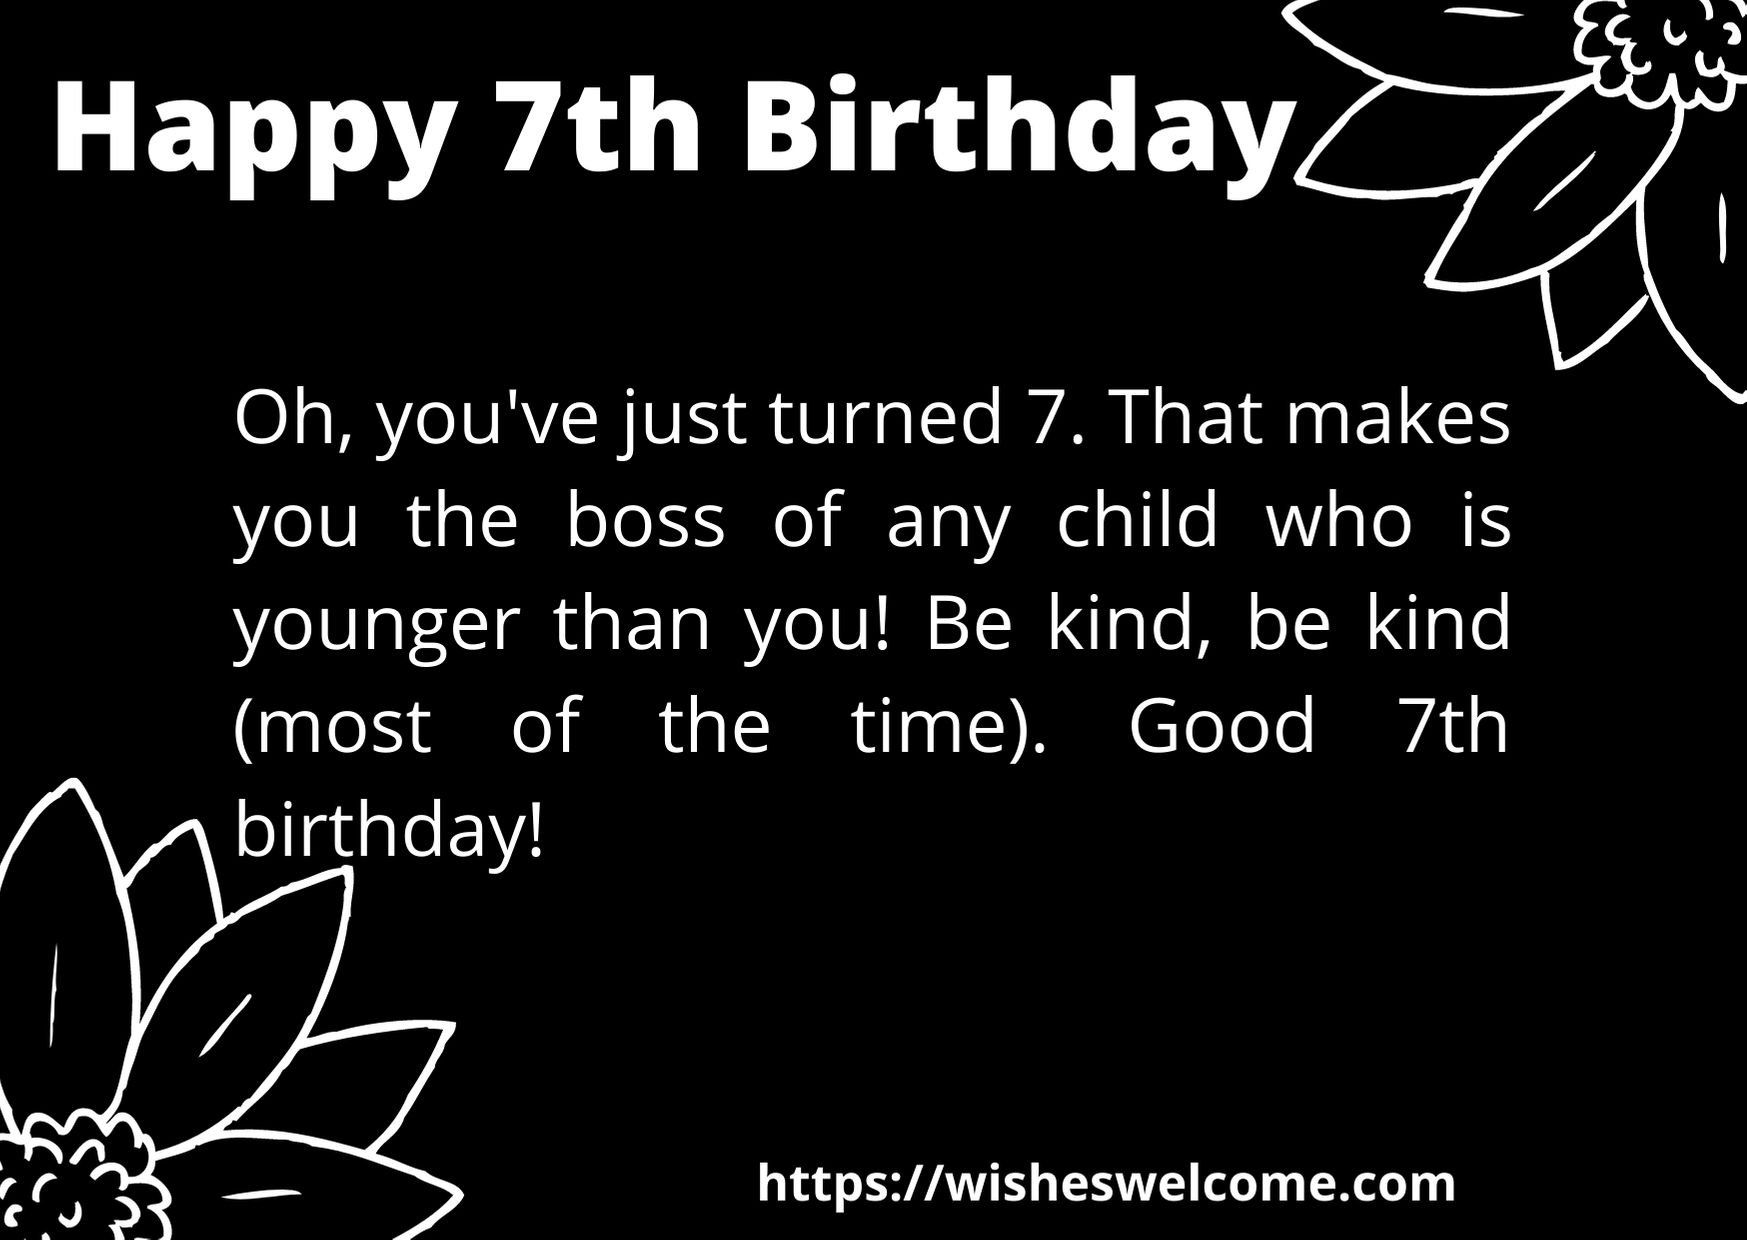 Happy 7th Bithday wishes